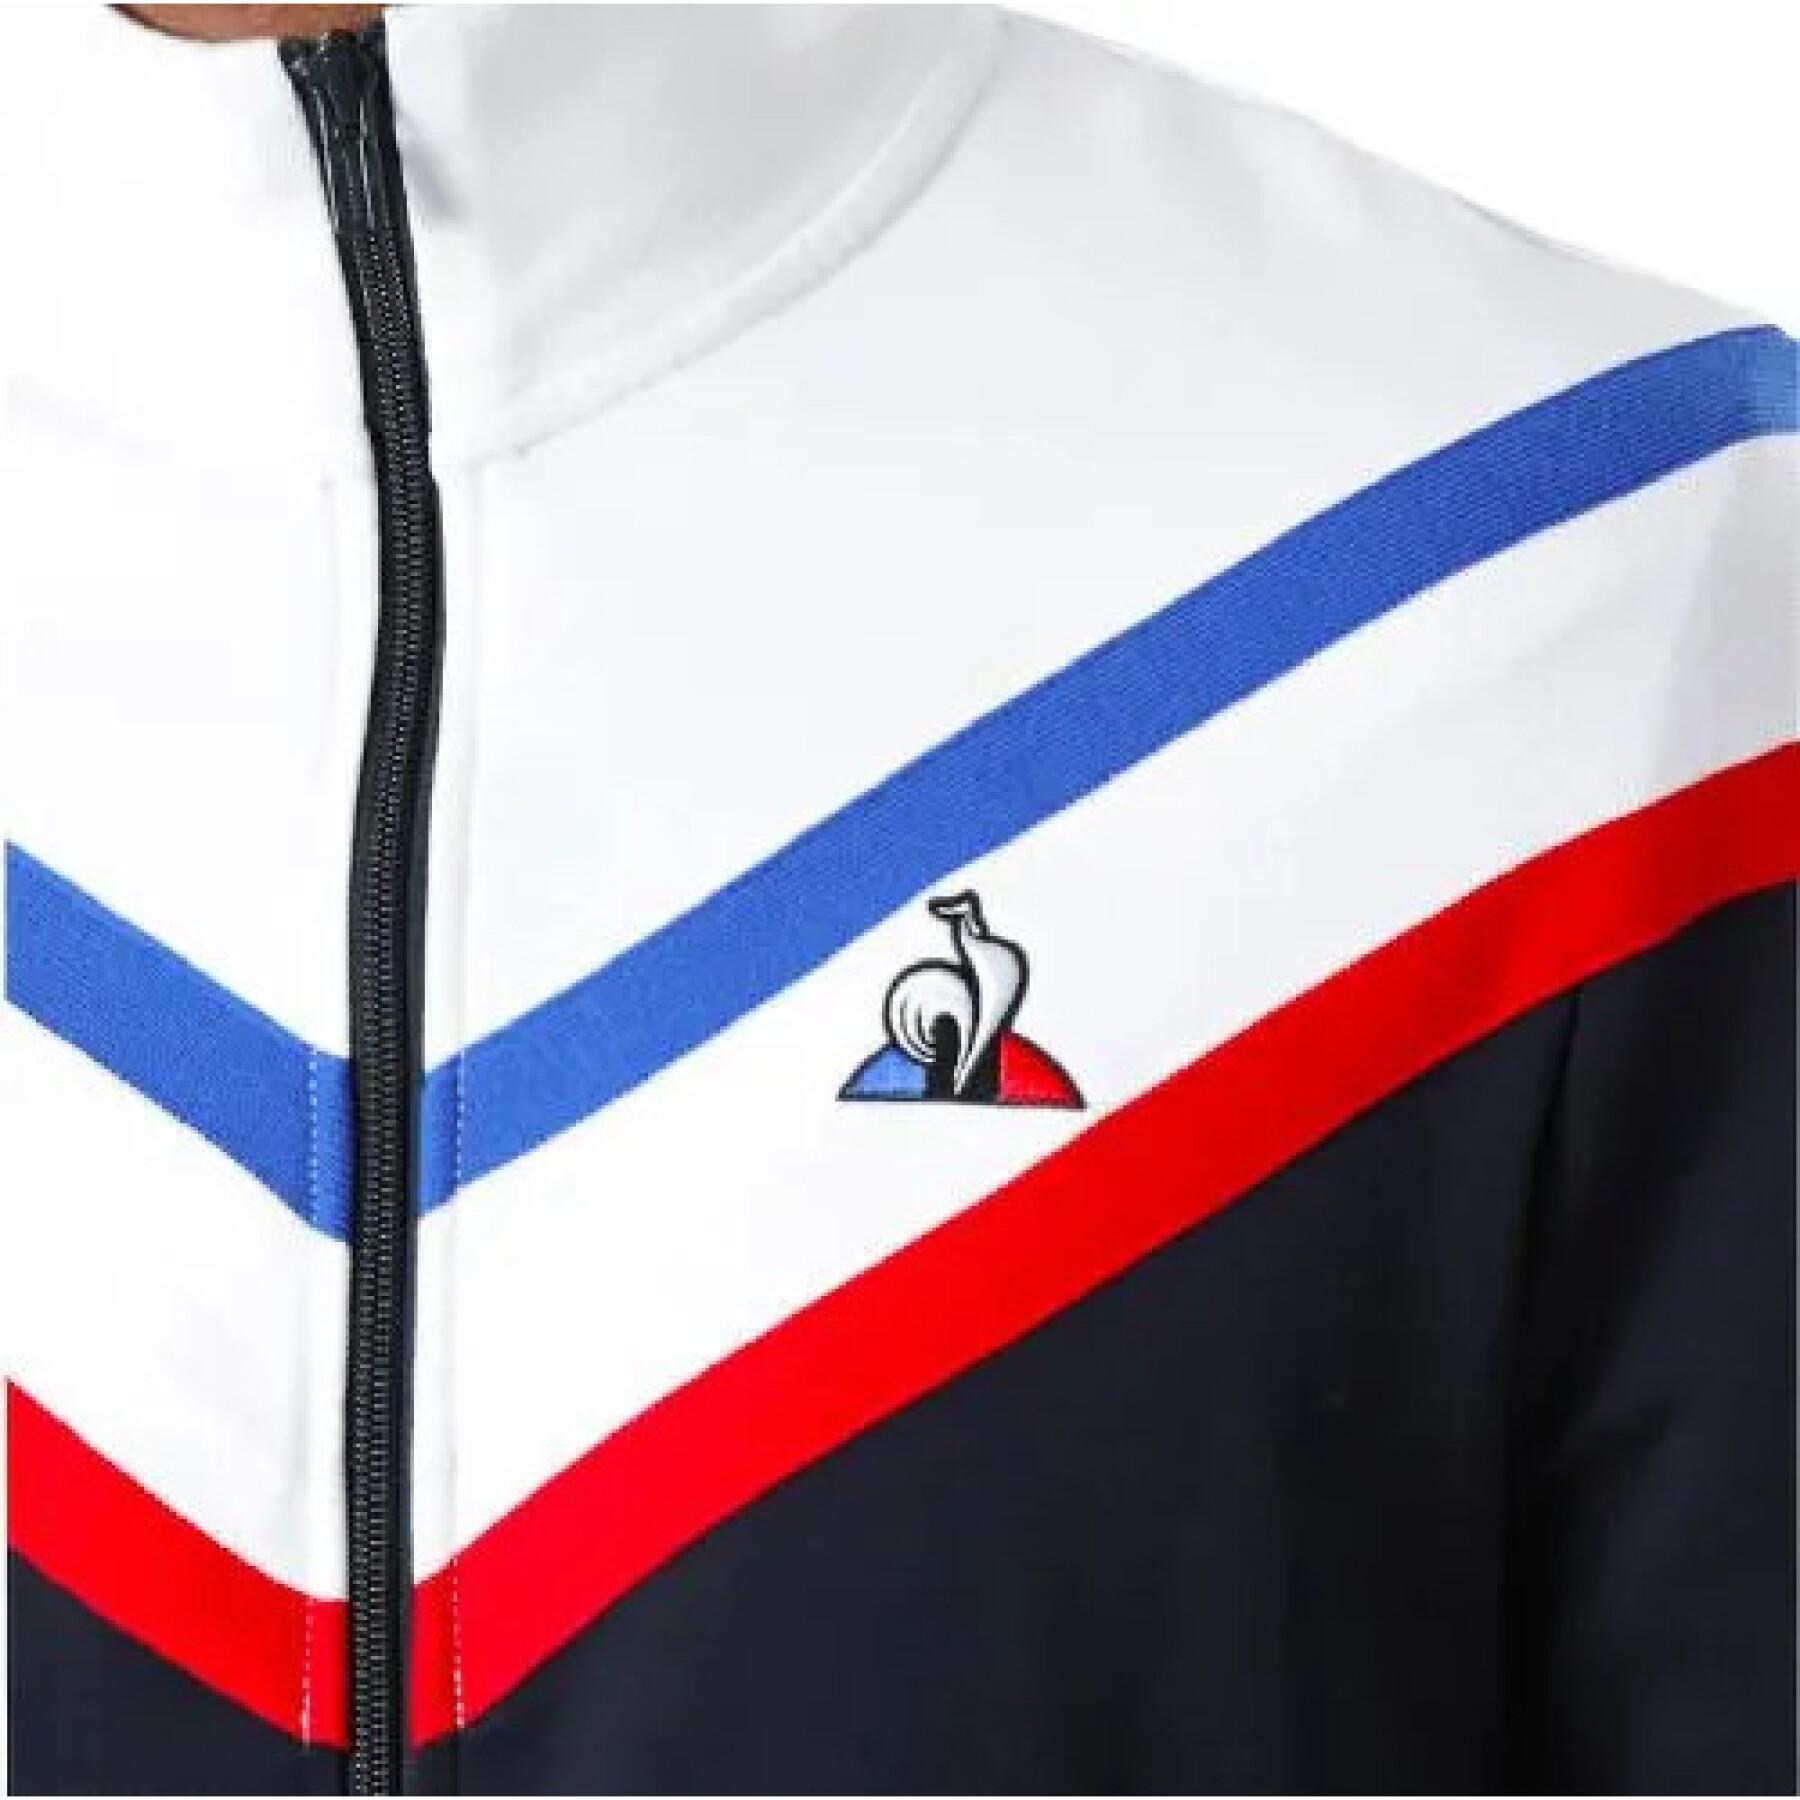 Jacket Le Coq Sportif tricolore fz n°1